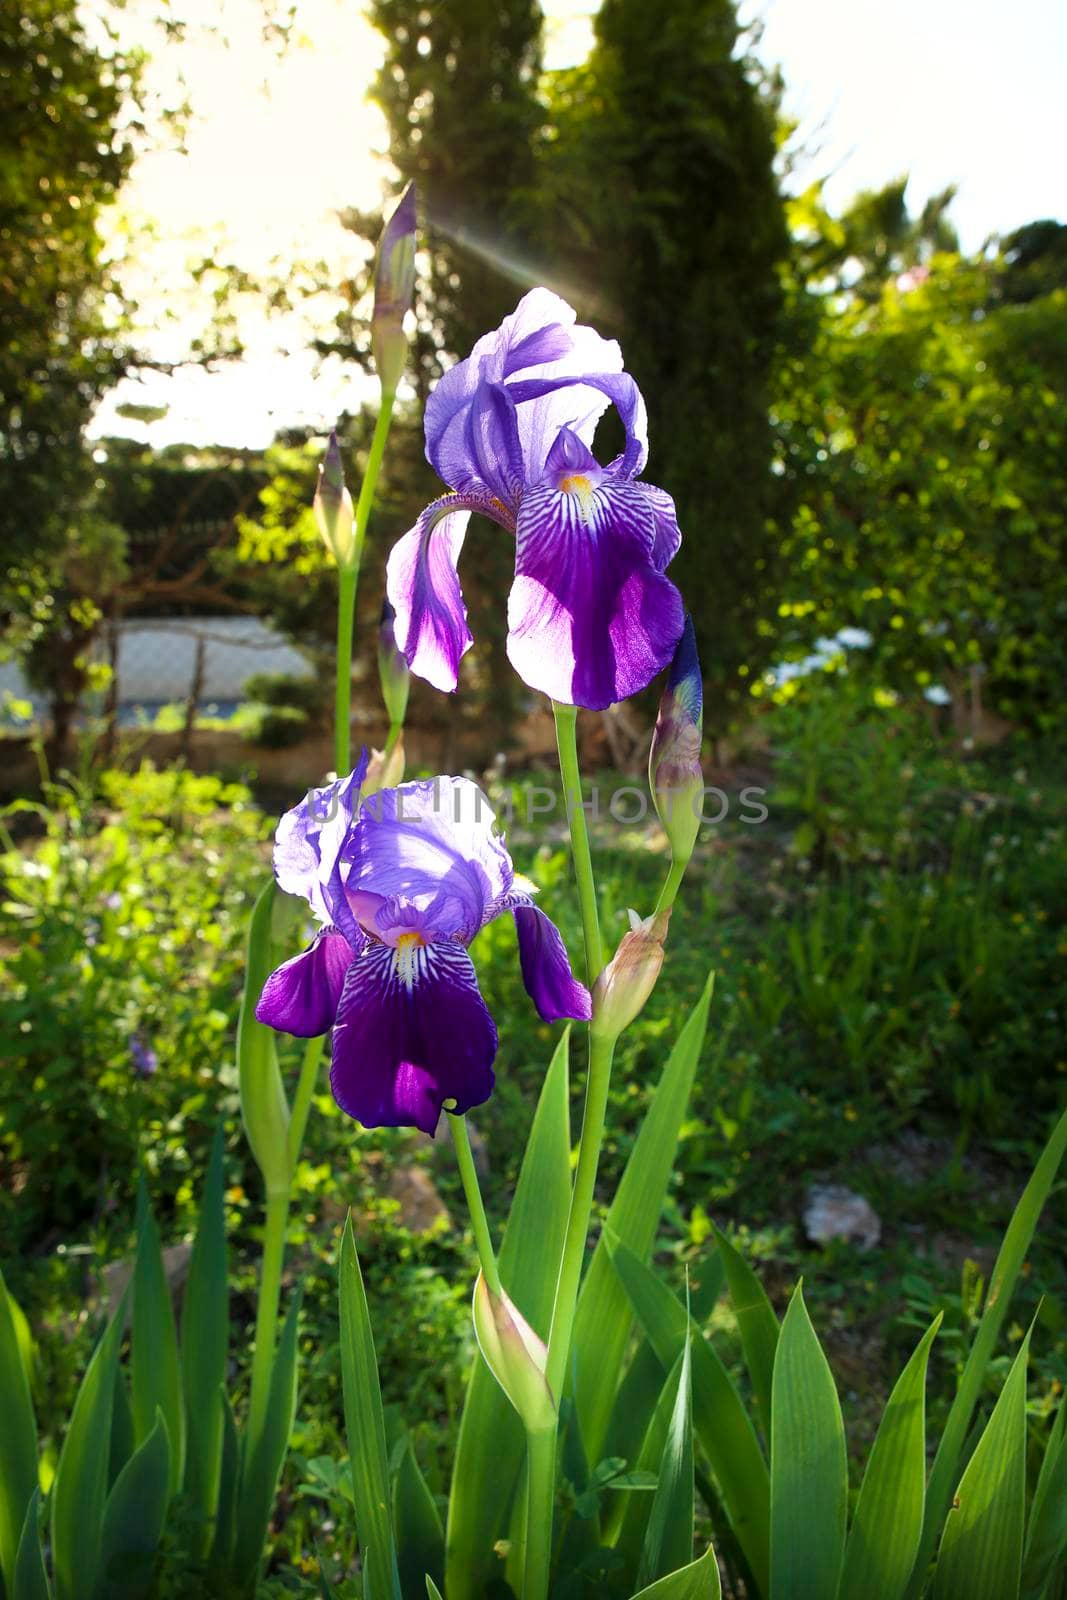 Bearded Iris, Iris Germanica in the garden by soniabonet